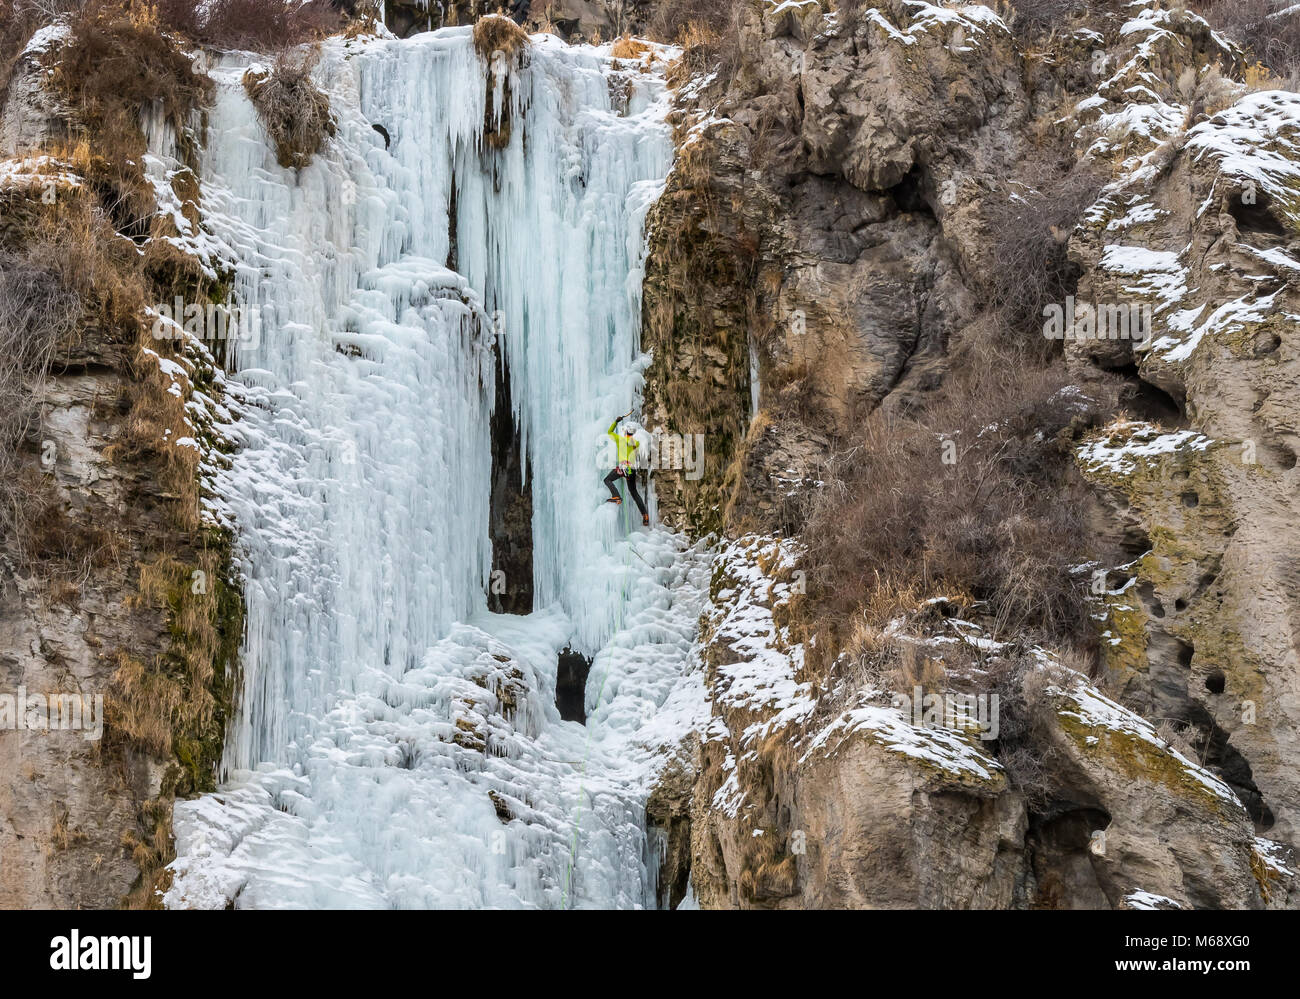 Elijah Weber climbing Lower Falls Right rated WI4 Near Shoshone Falls in Idaho Stock Photo